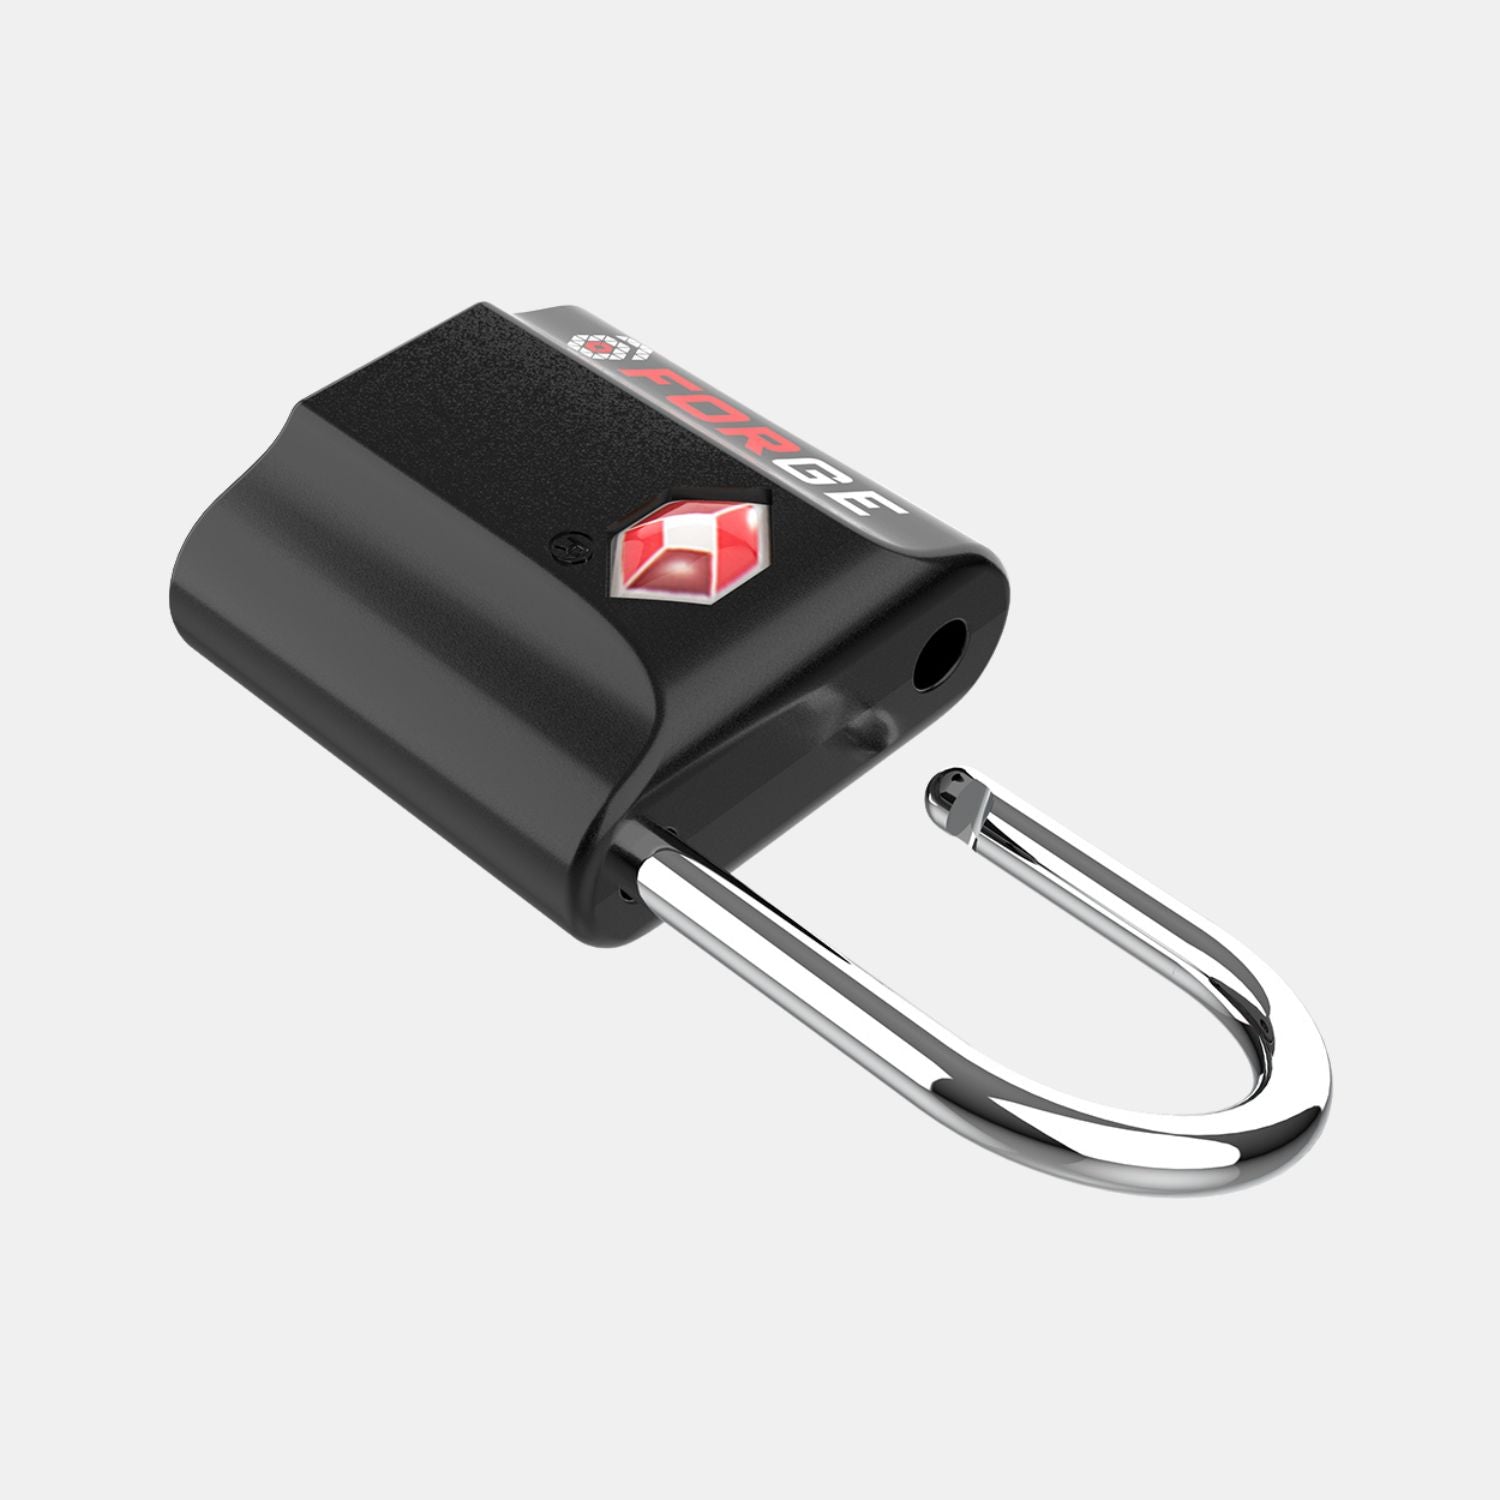 TSA Approved Dimple Key Luggage Lock - TSA006 Key, Ultra-Secure Small Size Lock. Black 8 Locks